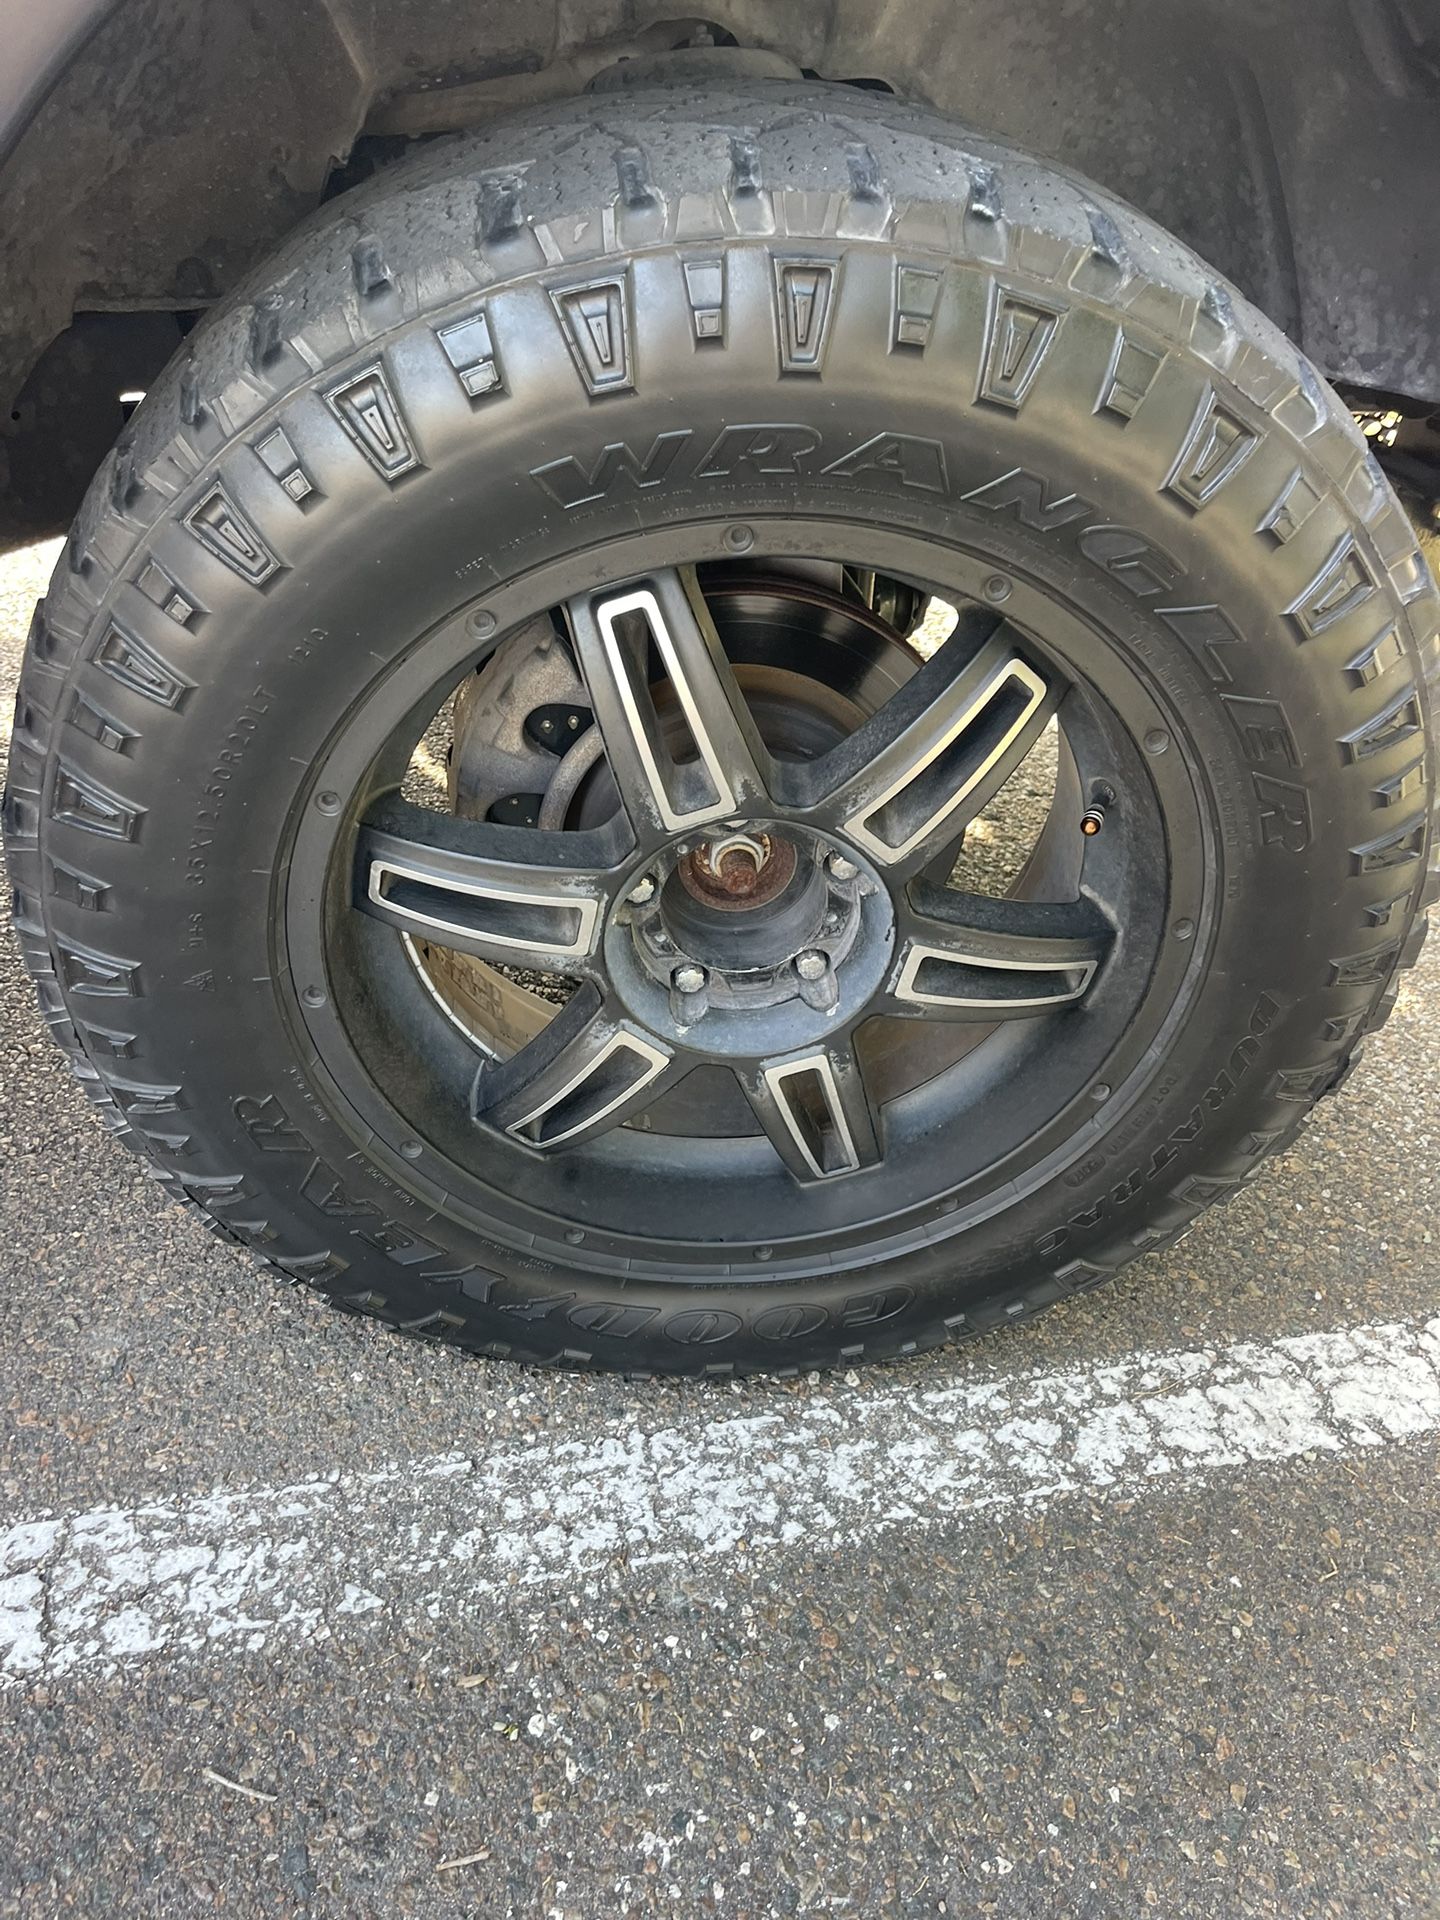 Good Year Wrangler Tires 35 X 12 1/2 X 20”